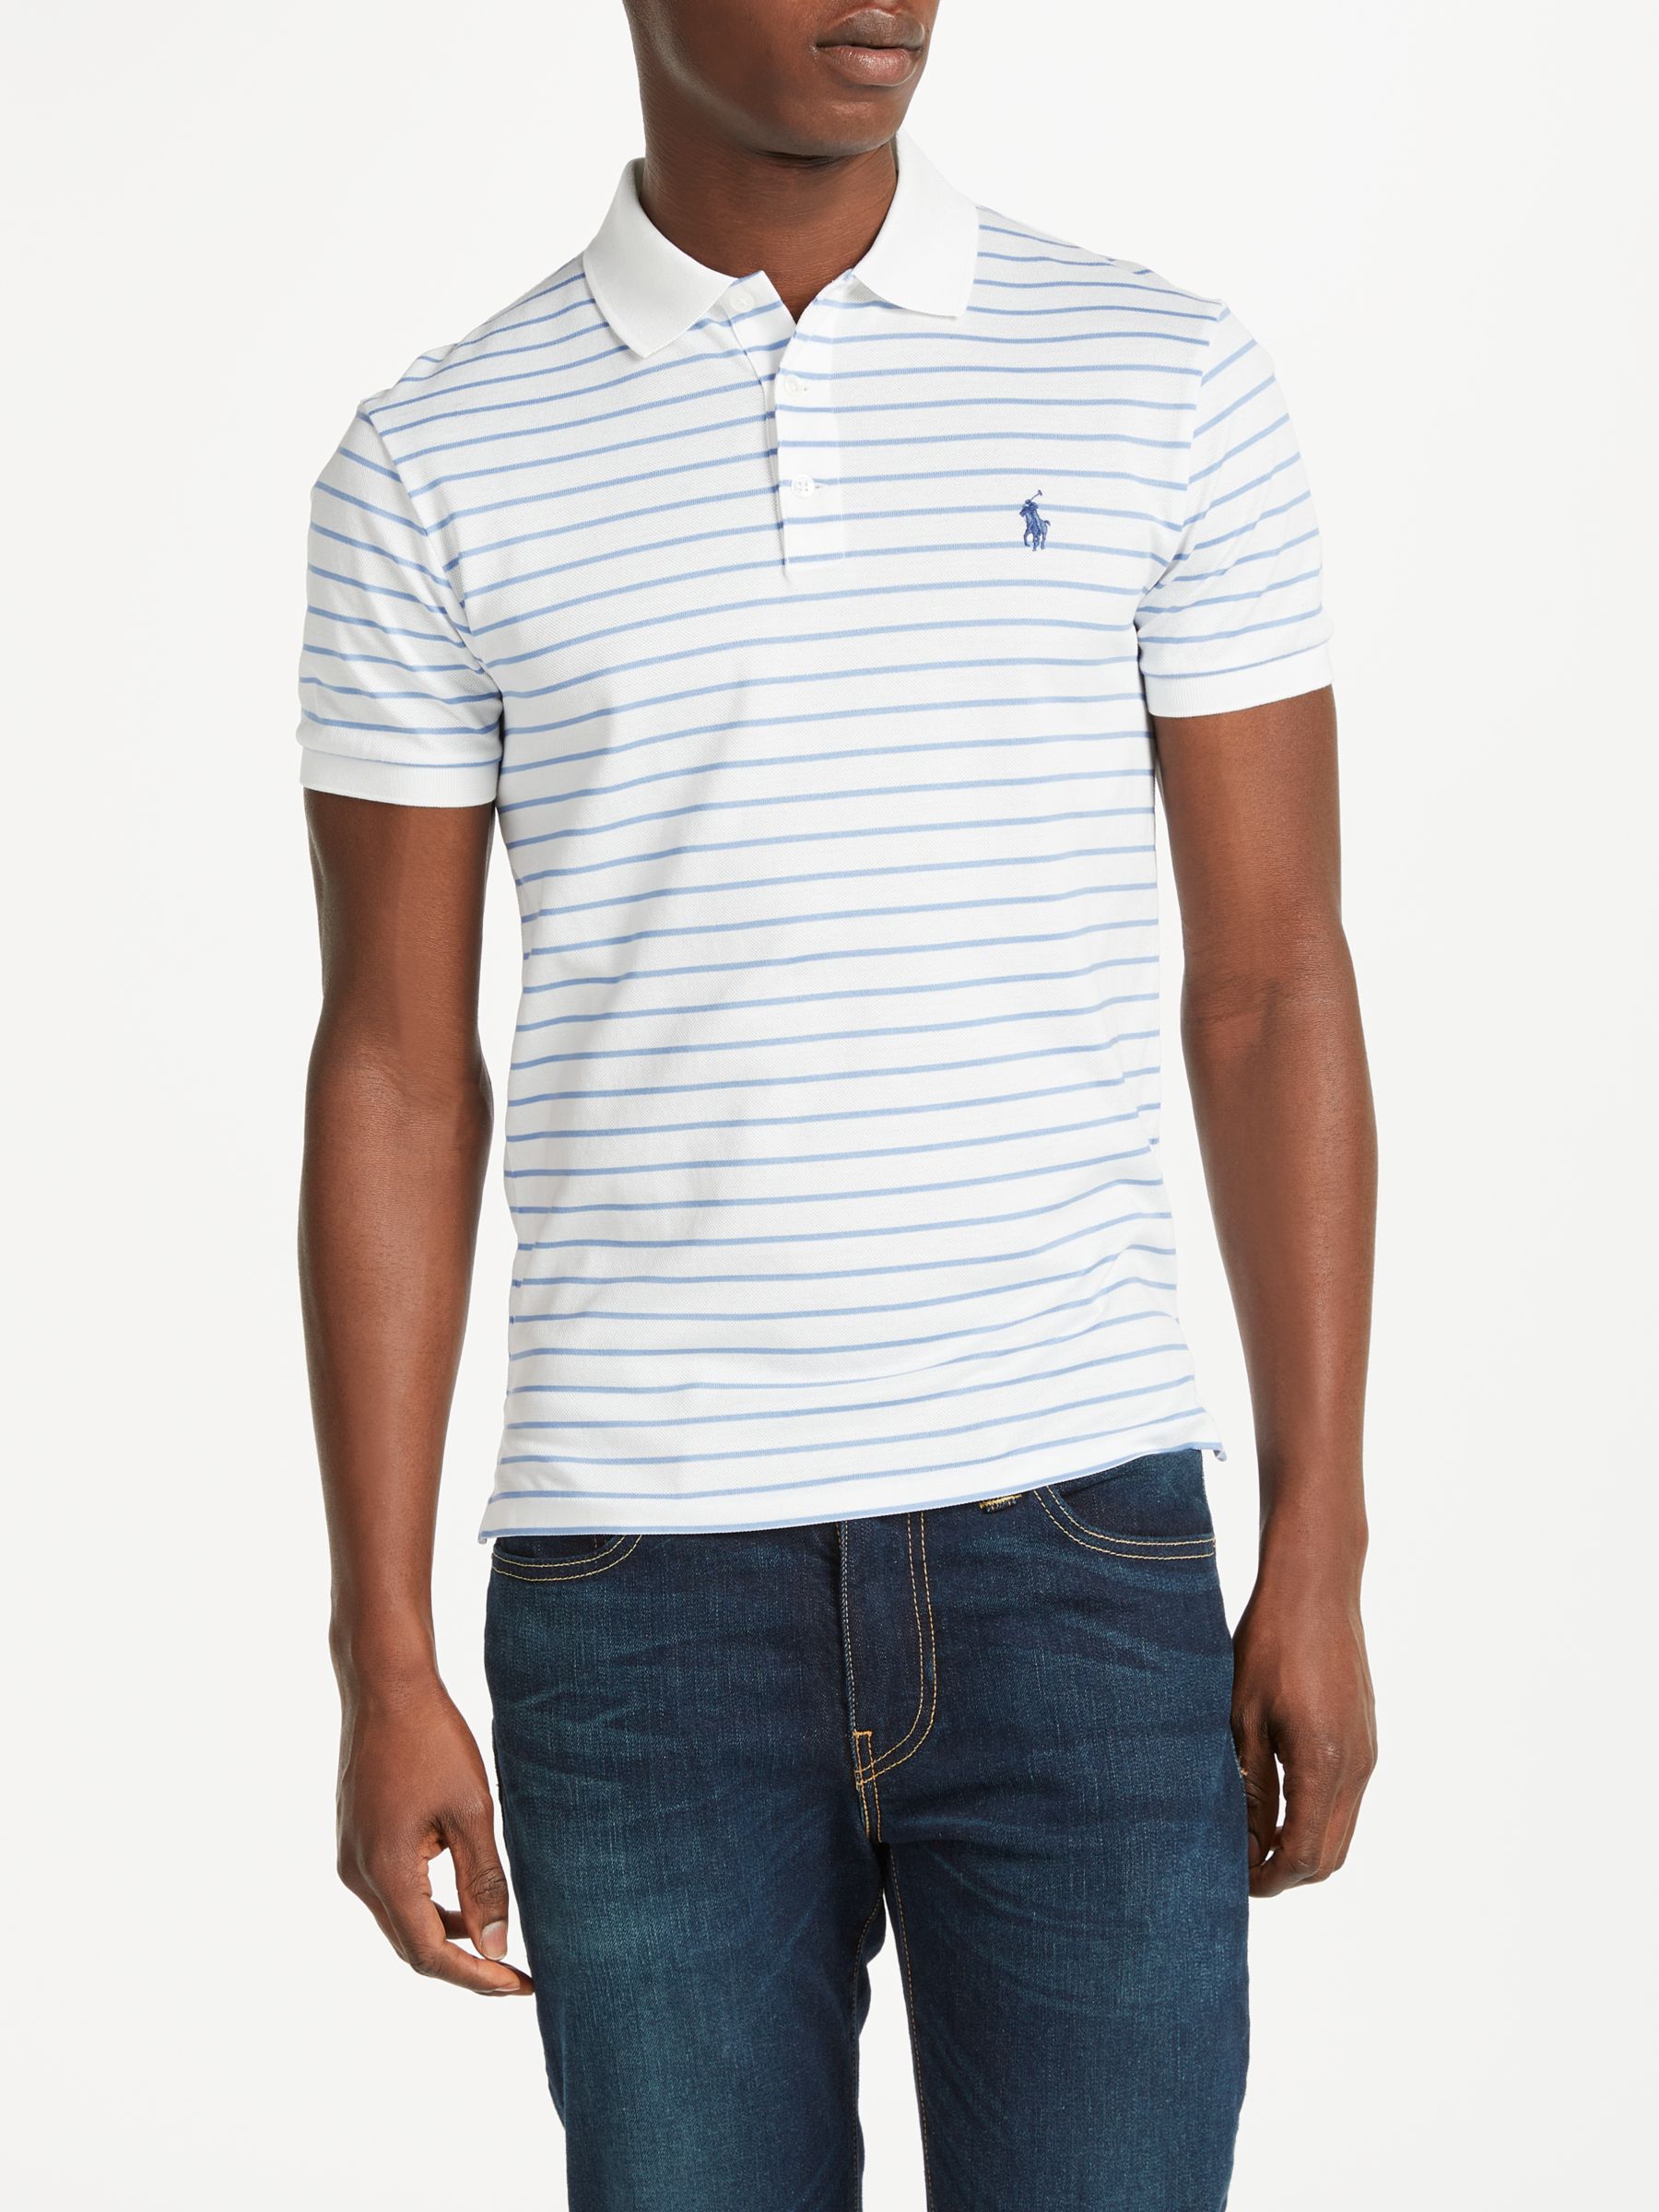 blue and white striped ralph lauren polo shirt